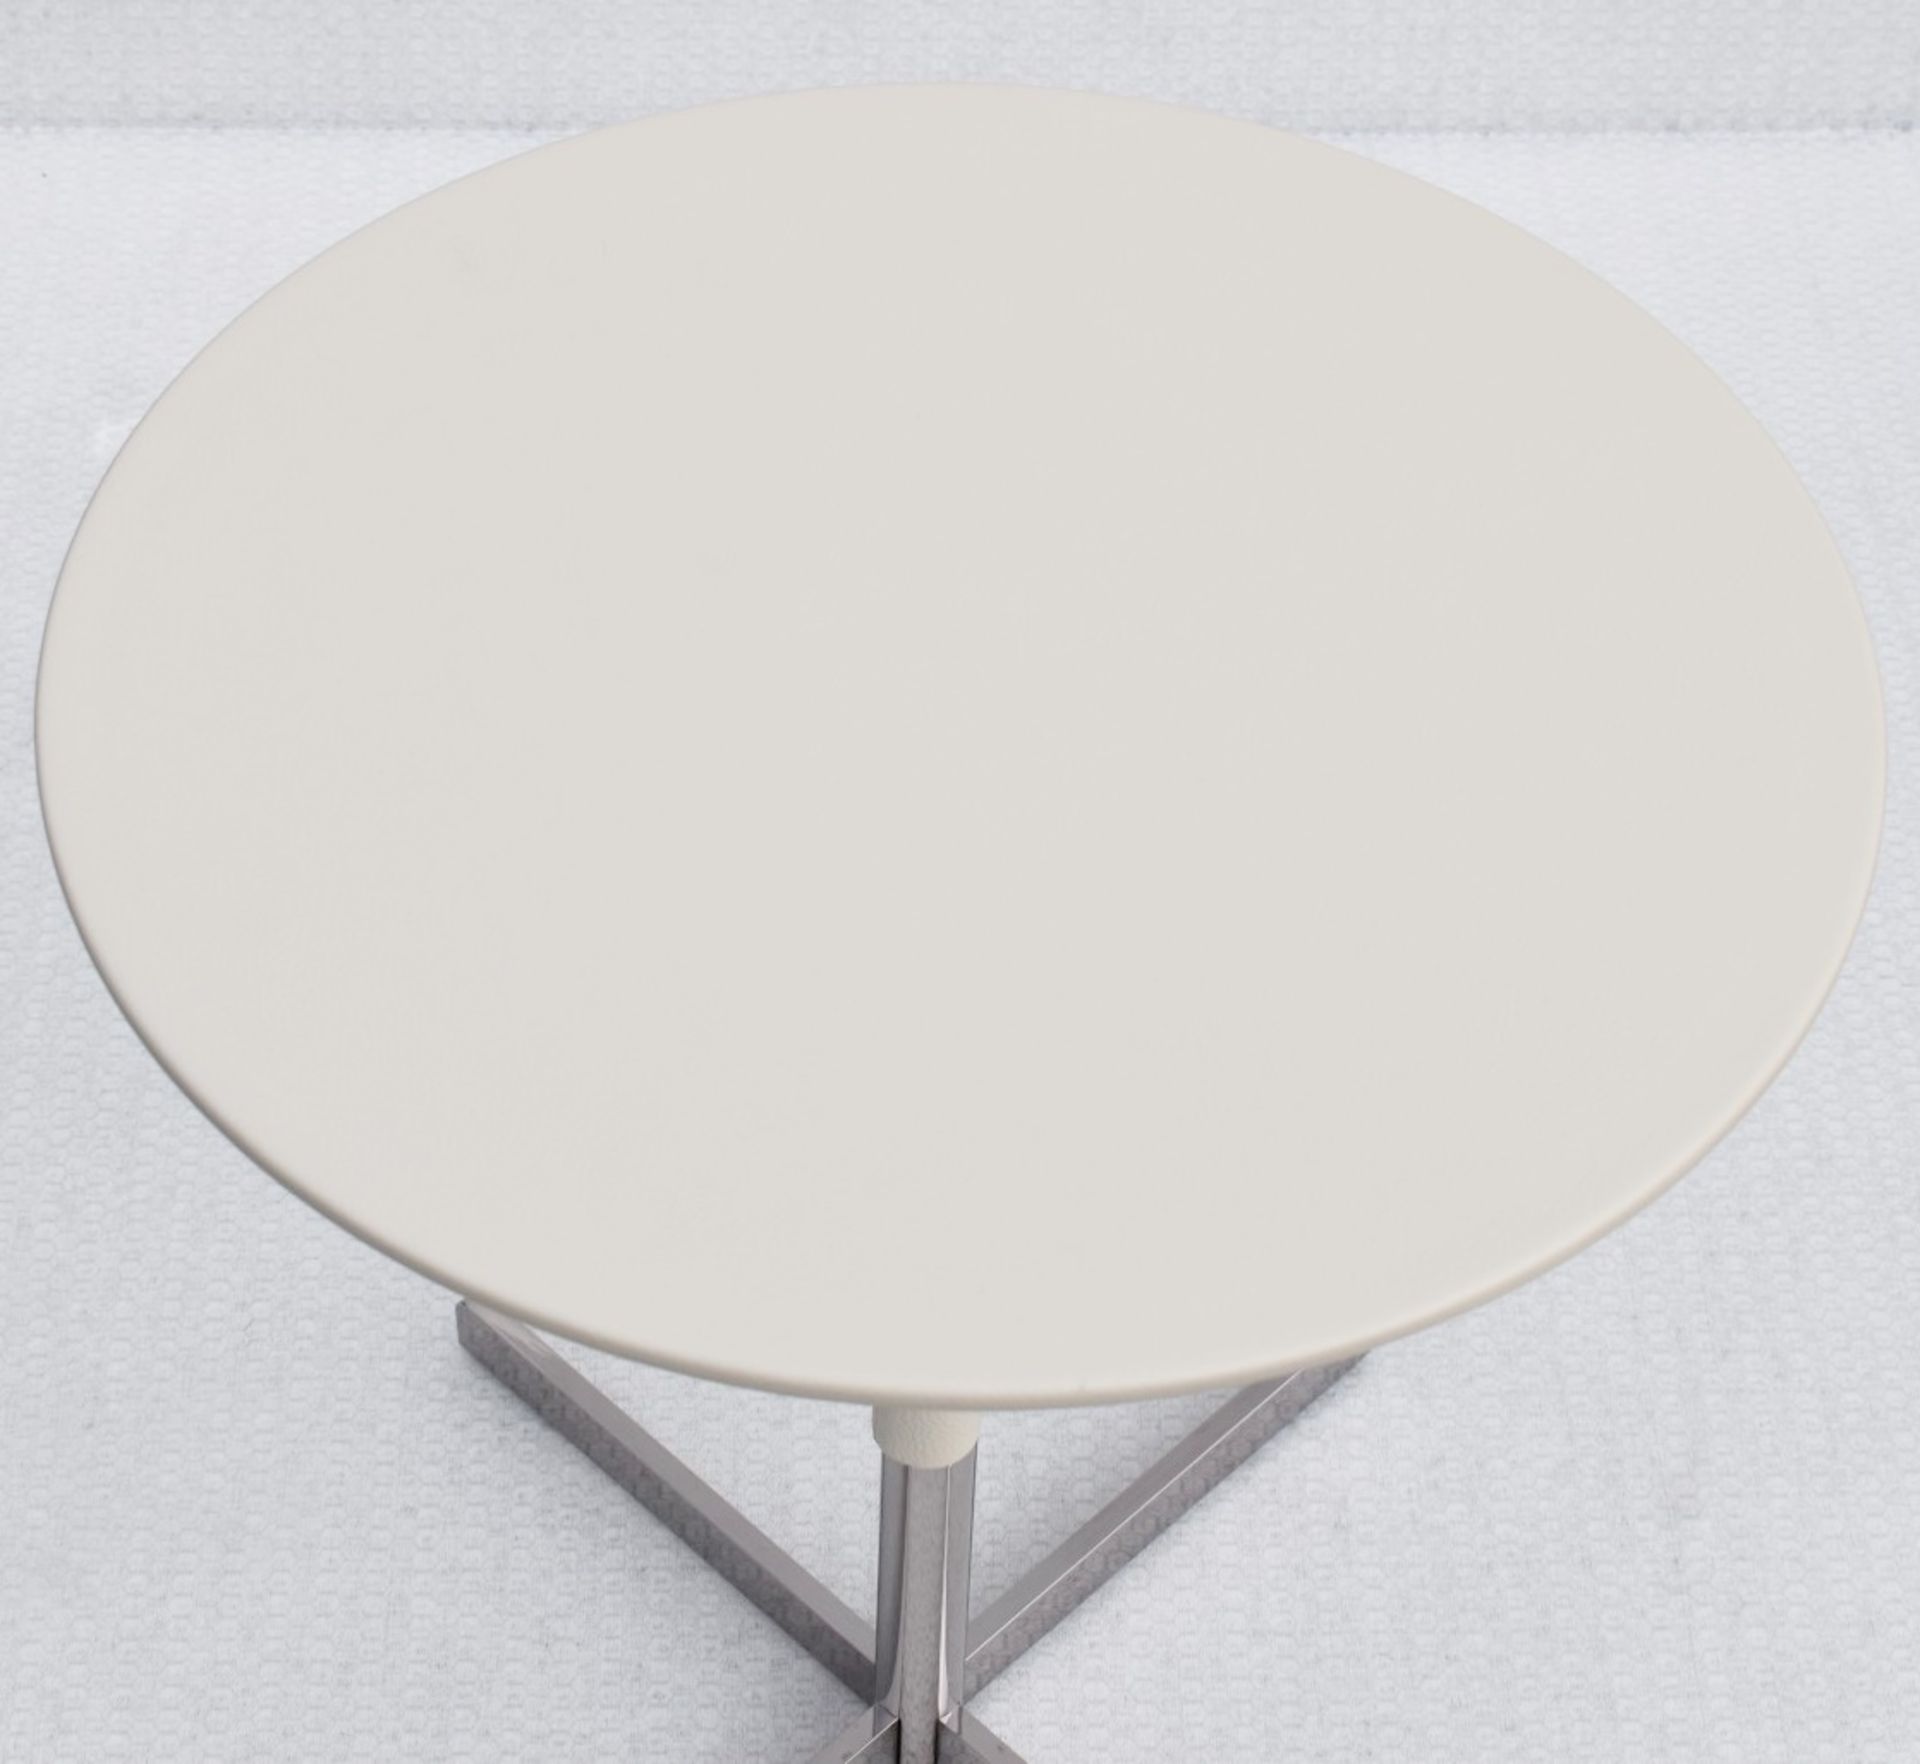 1 x POLTRONA FRAU 'Bob' Designer Leather Upholstered Coffee Table in Cream - Original Price £2,900 - Image 7 of 10